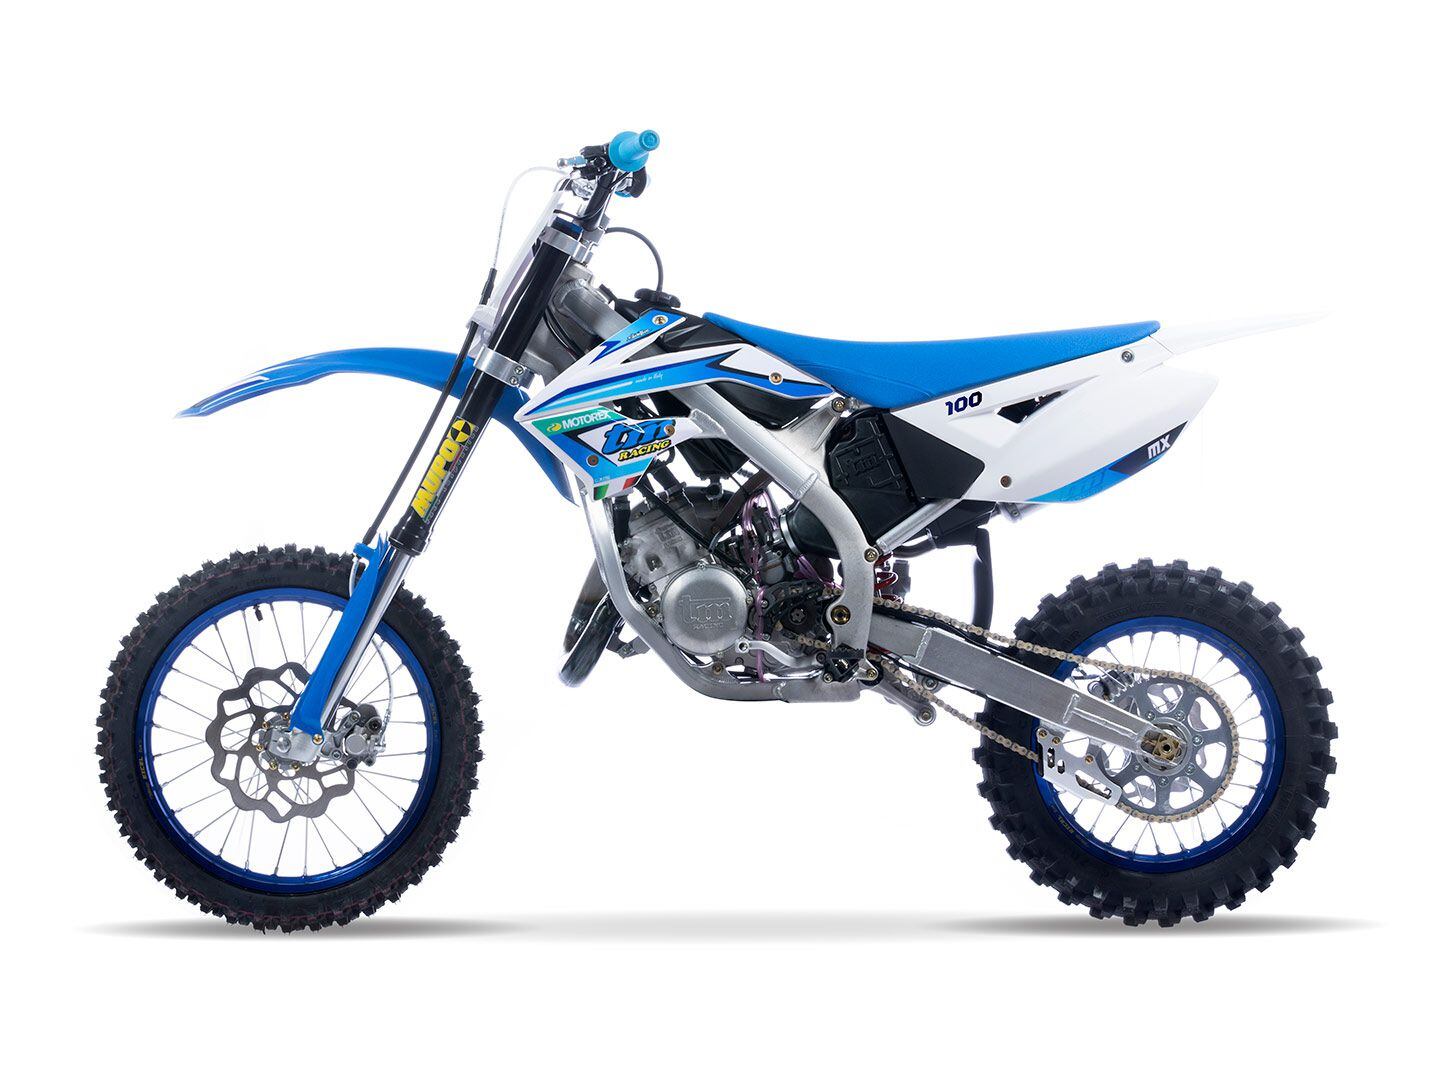 Motocross: Most expensive dirt bikes